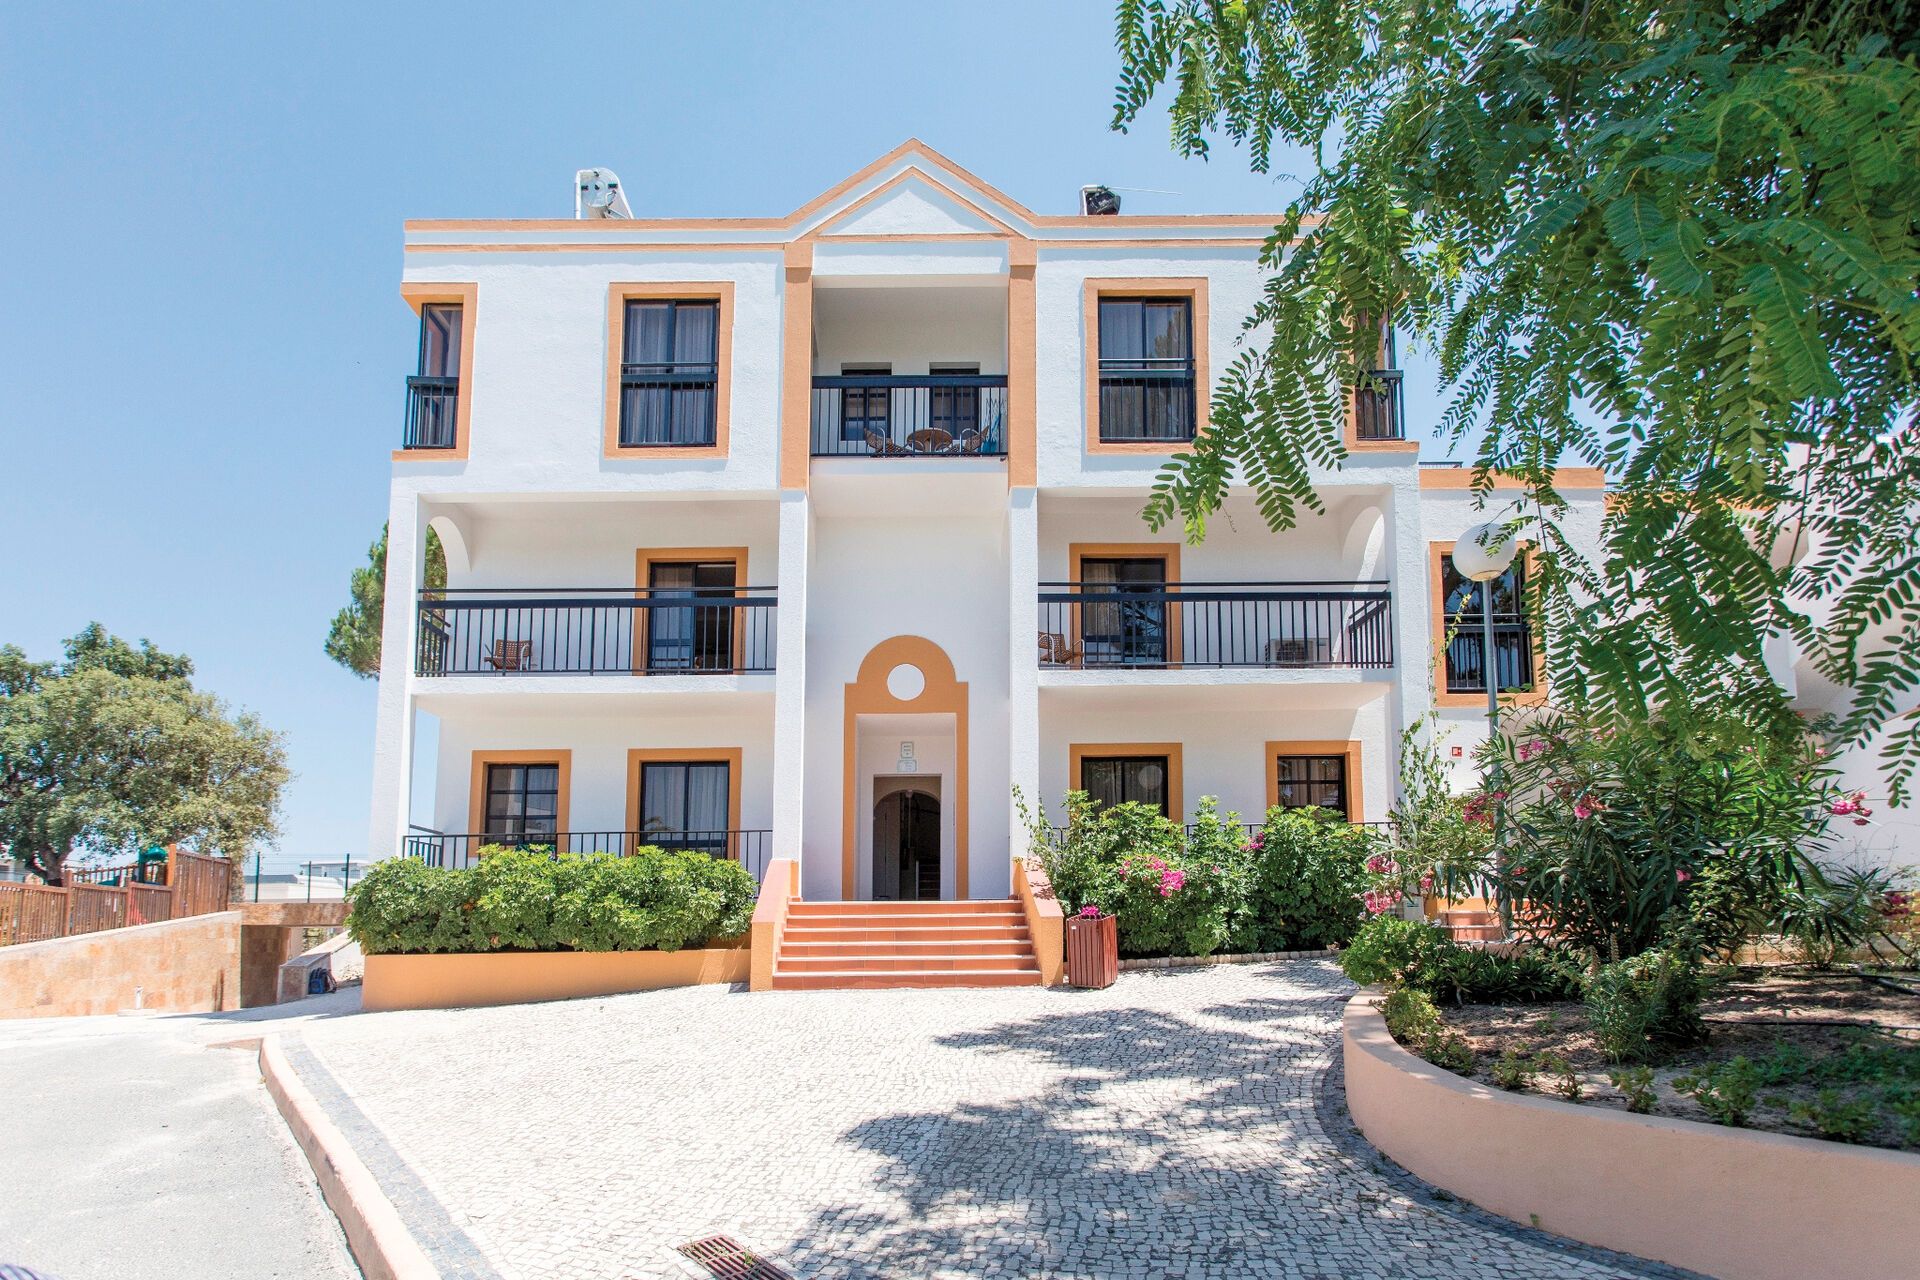 Portugal - Algarve - Albufeira - Hotel Alfagar I Village 3*